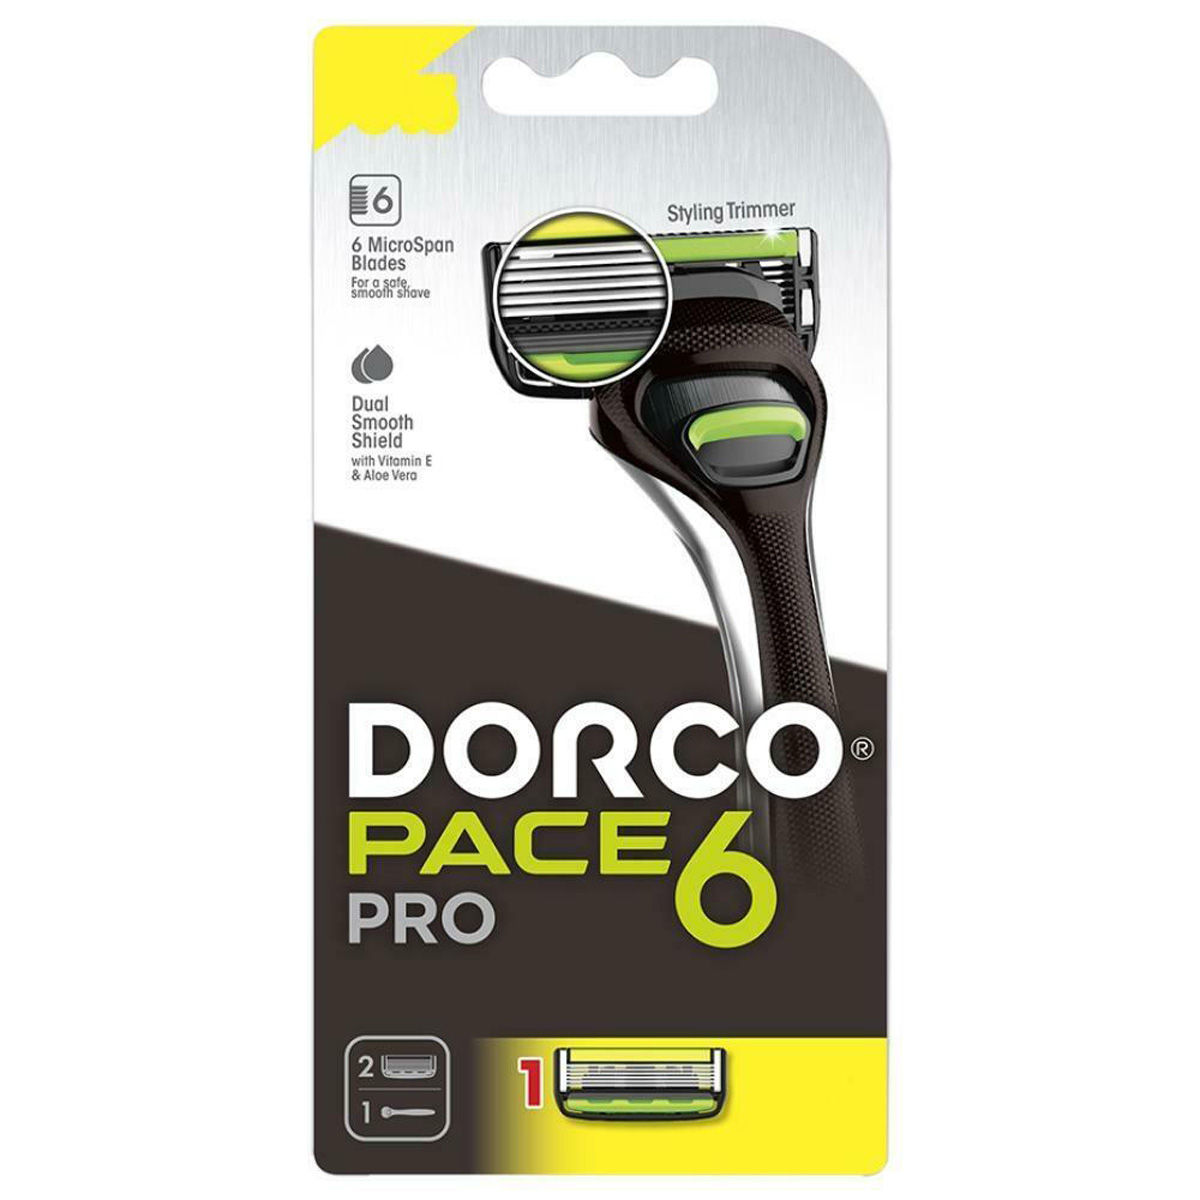 Buy Dorco Pace Pro 6 Razor+Cartridge, 2 Count Online